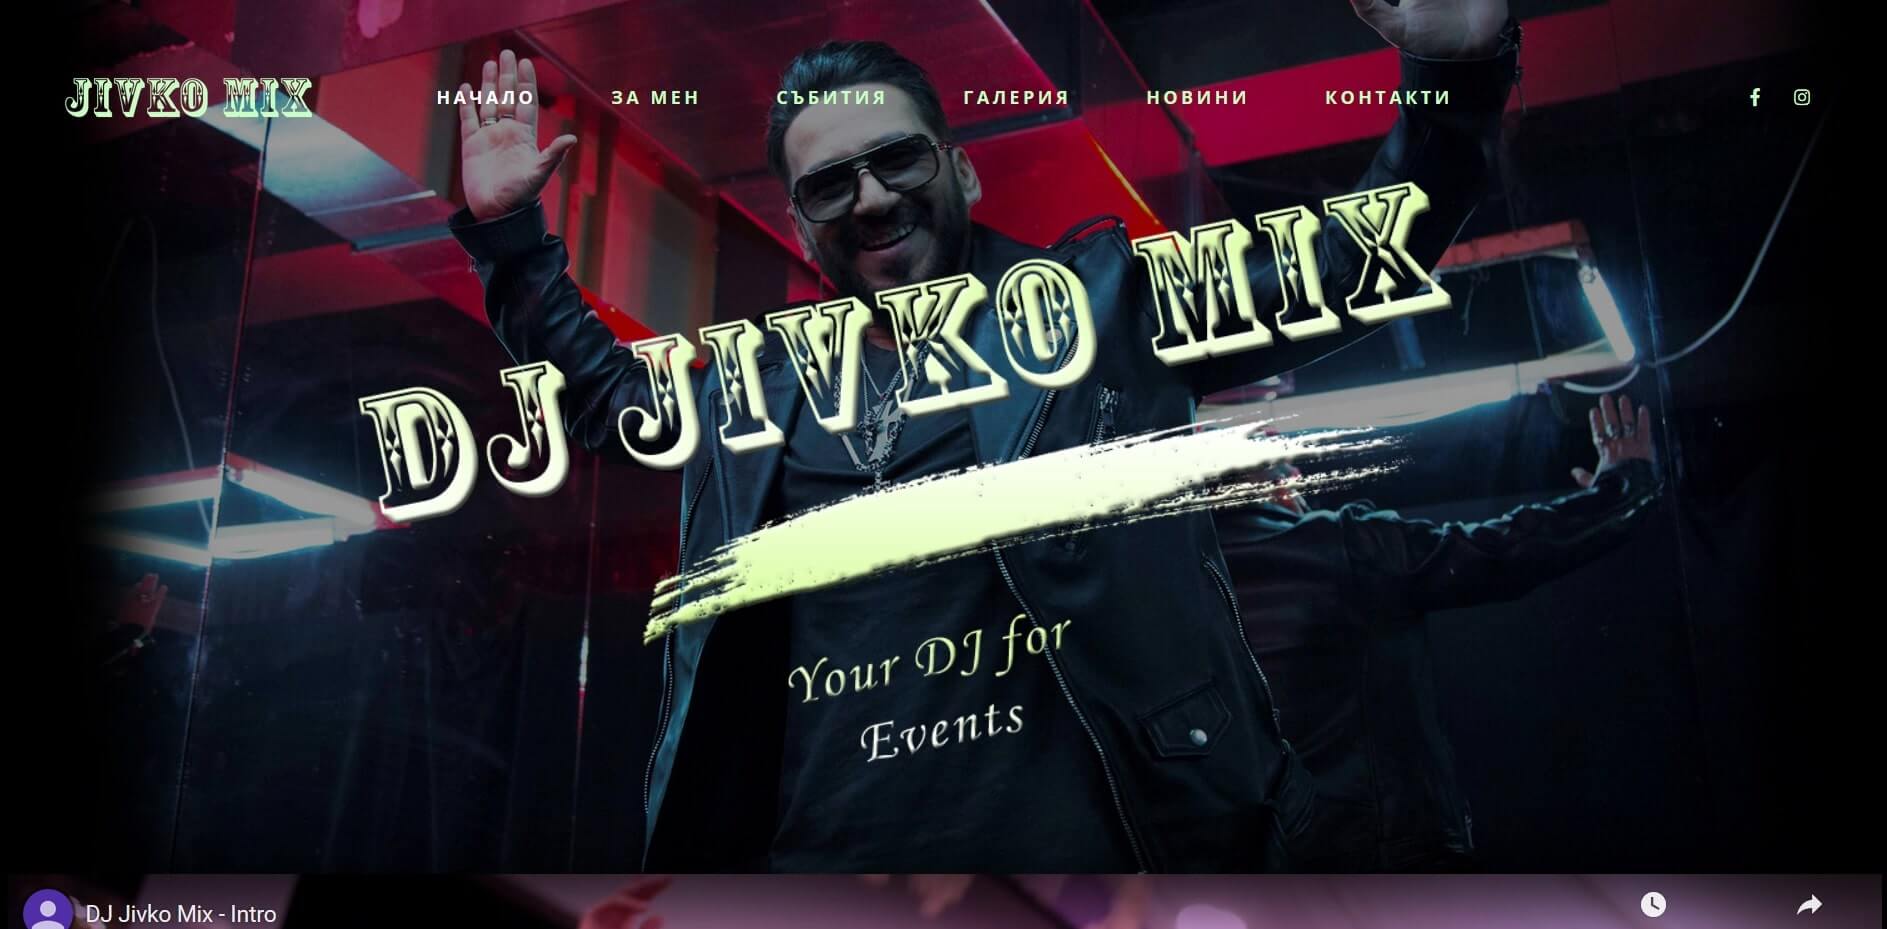 DJ Jivko Mix - DJ for weddings and events